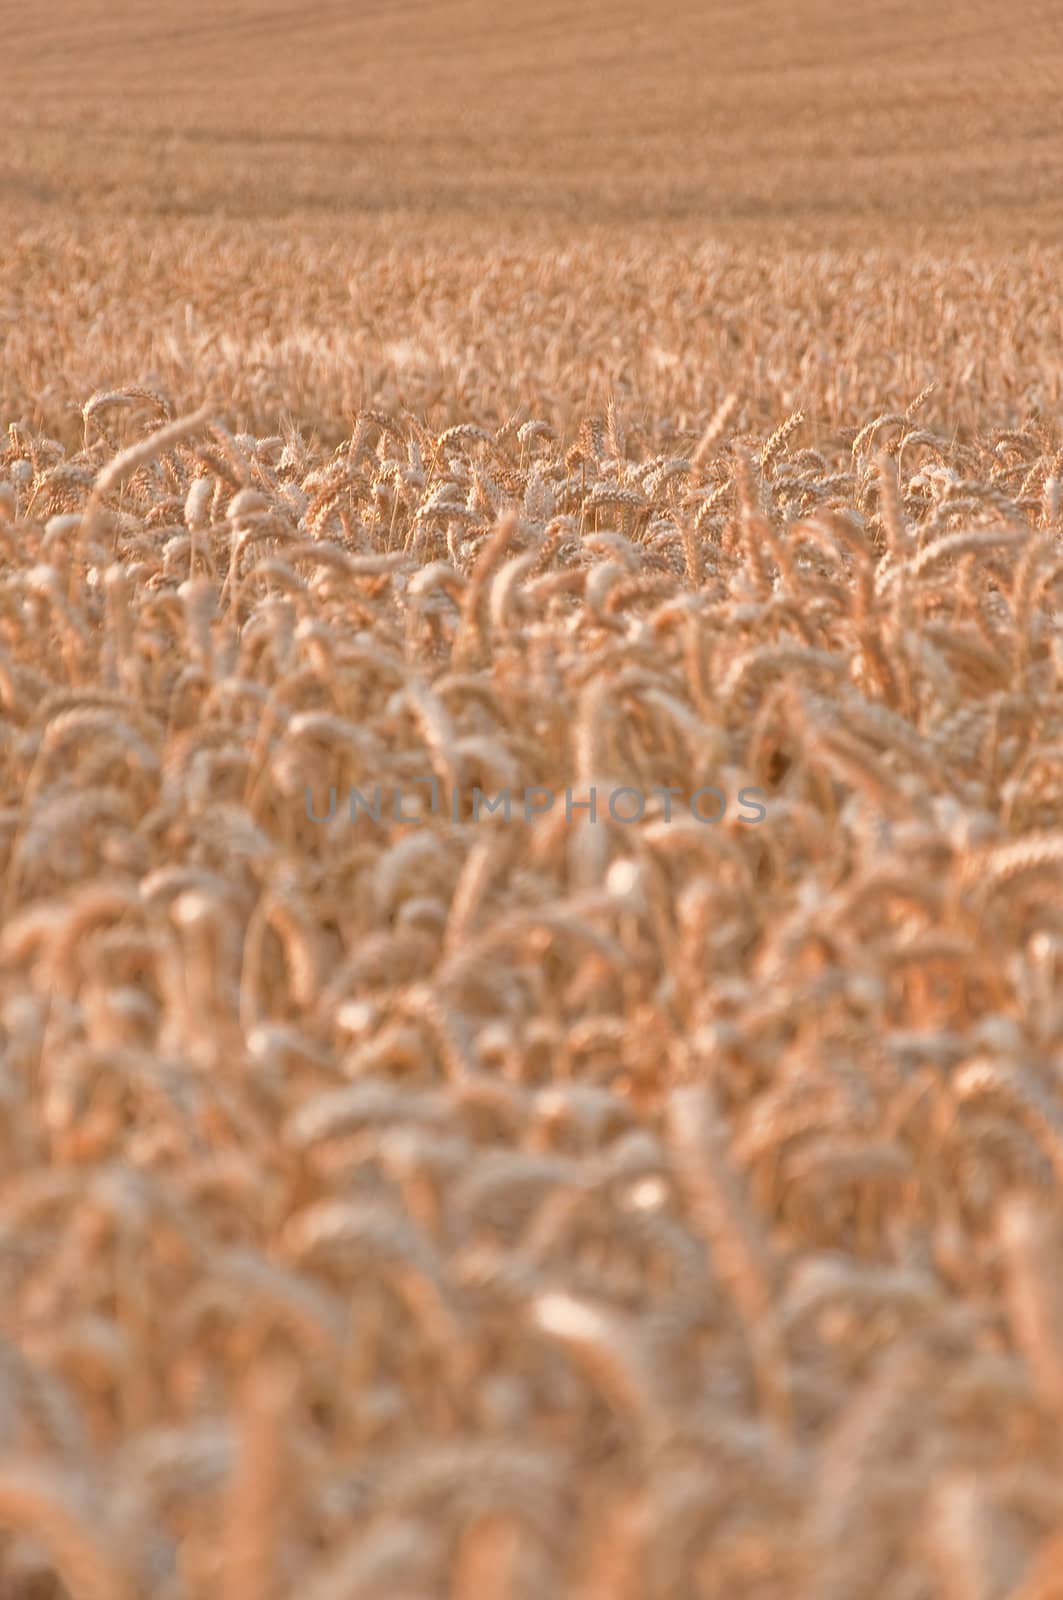 Golden wheat field with narrow depth of field